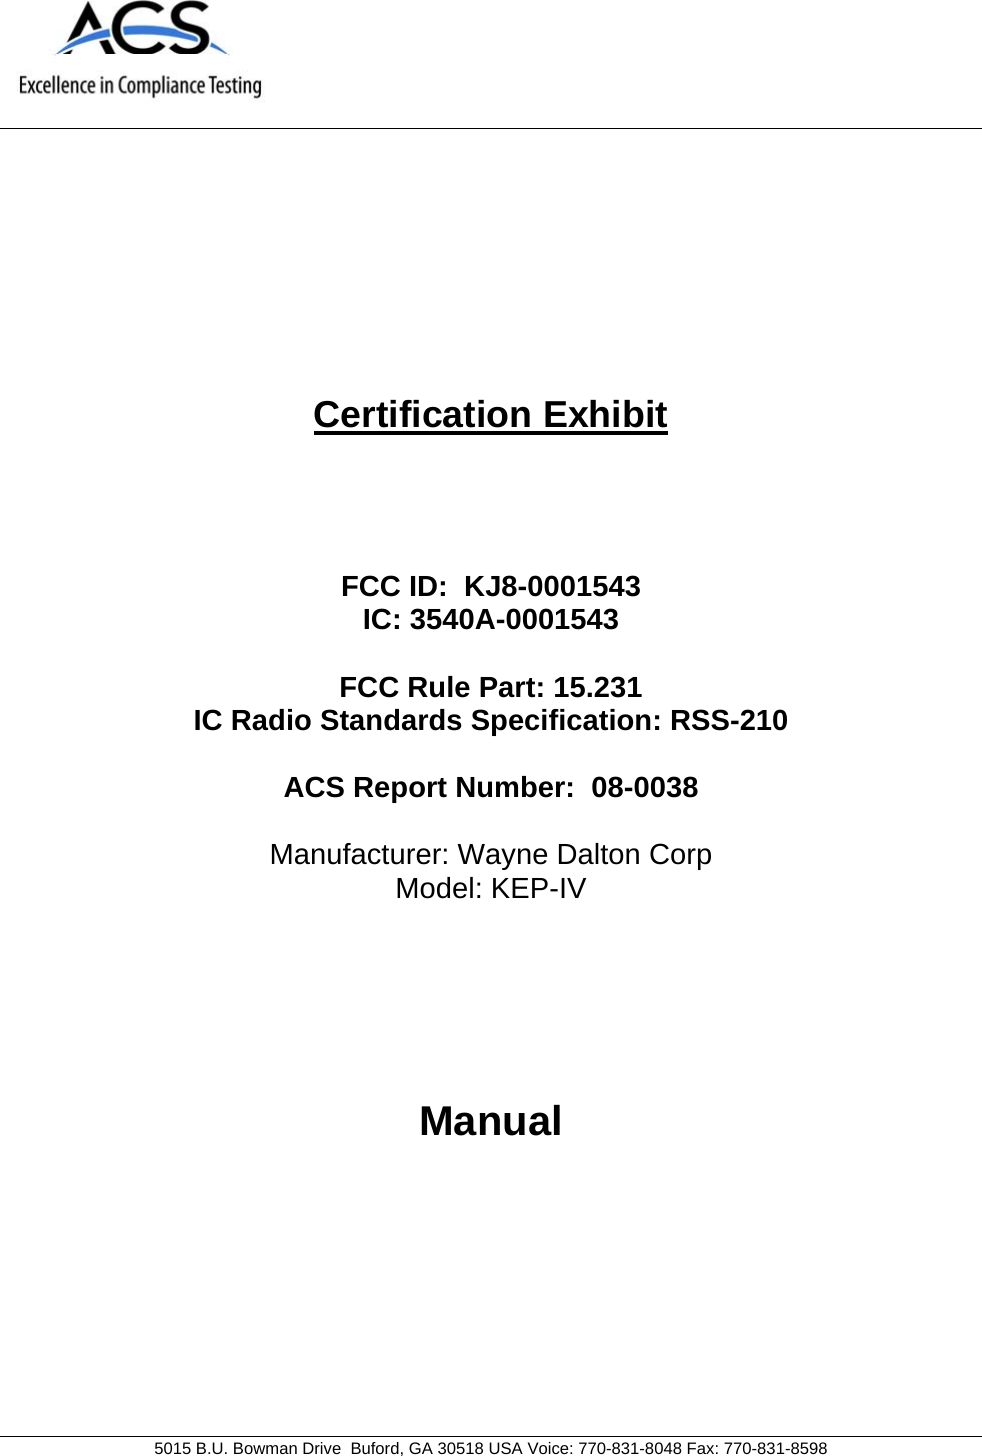     5015 B.U. Bowman Drive  Buford, GA 30518 USA Voice: 770-831-8048 Fax: 770-831-8598   Certification Exhibit     FCC ID:  KJ8-0001543 IC: 3540A-0001543  FCC Rule Part: 15.231 IC Radio Standards Specification: RSS-210  ACS Report Number:  08-0038   Manufacturer: Wayne Dalton Corp Model: KEP-IV     Manual  